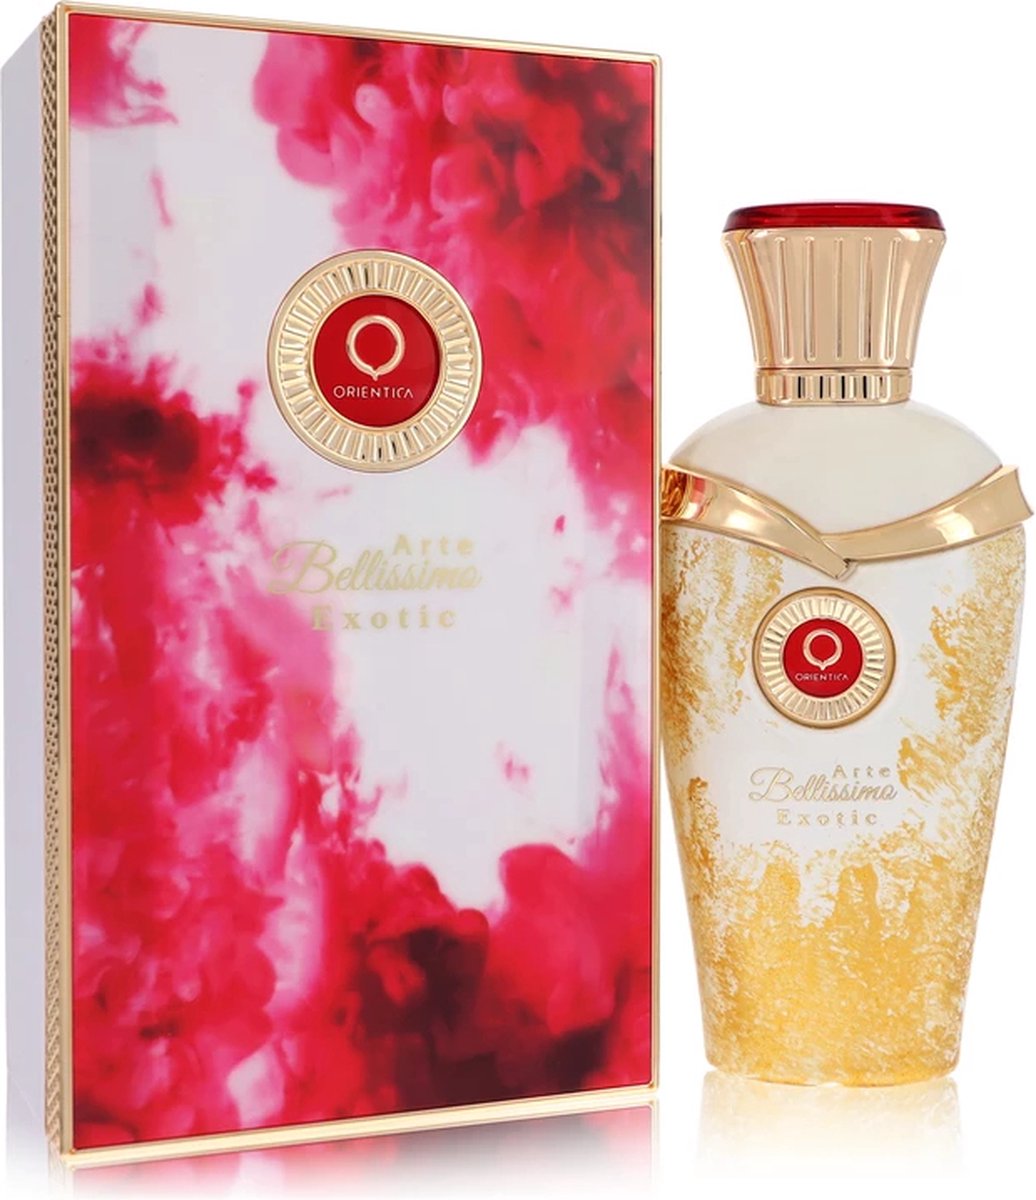 Orientica Arte Bellissimo Exotic eau de parfum spray 75 ml